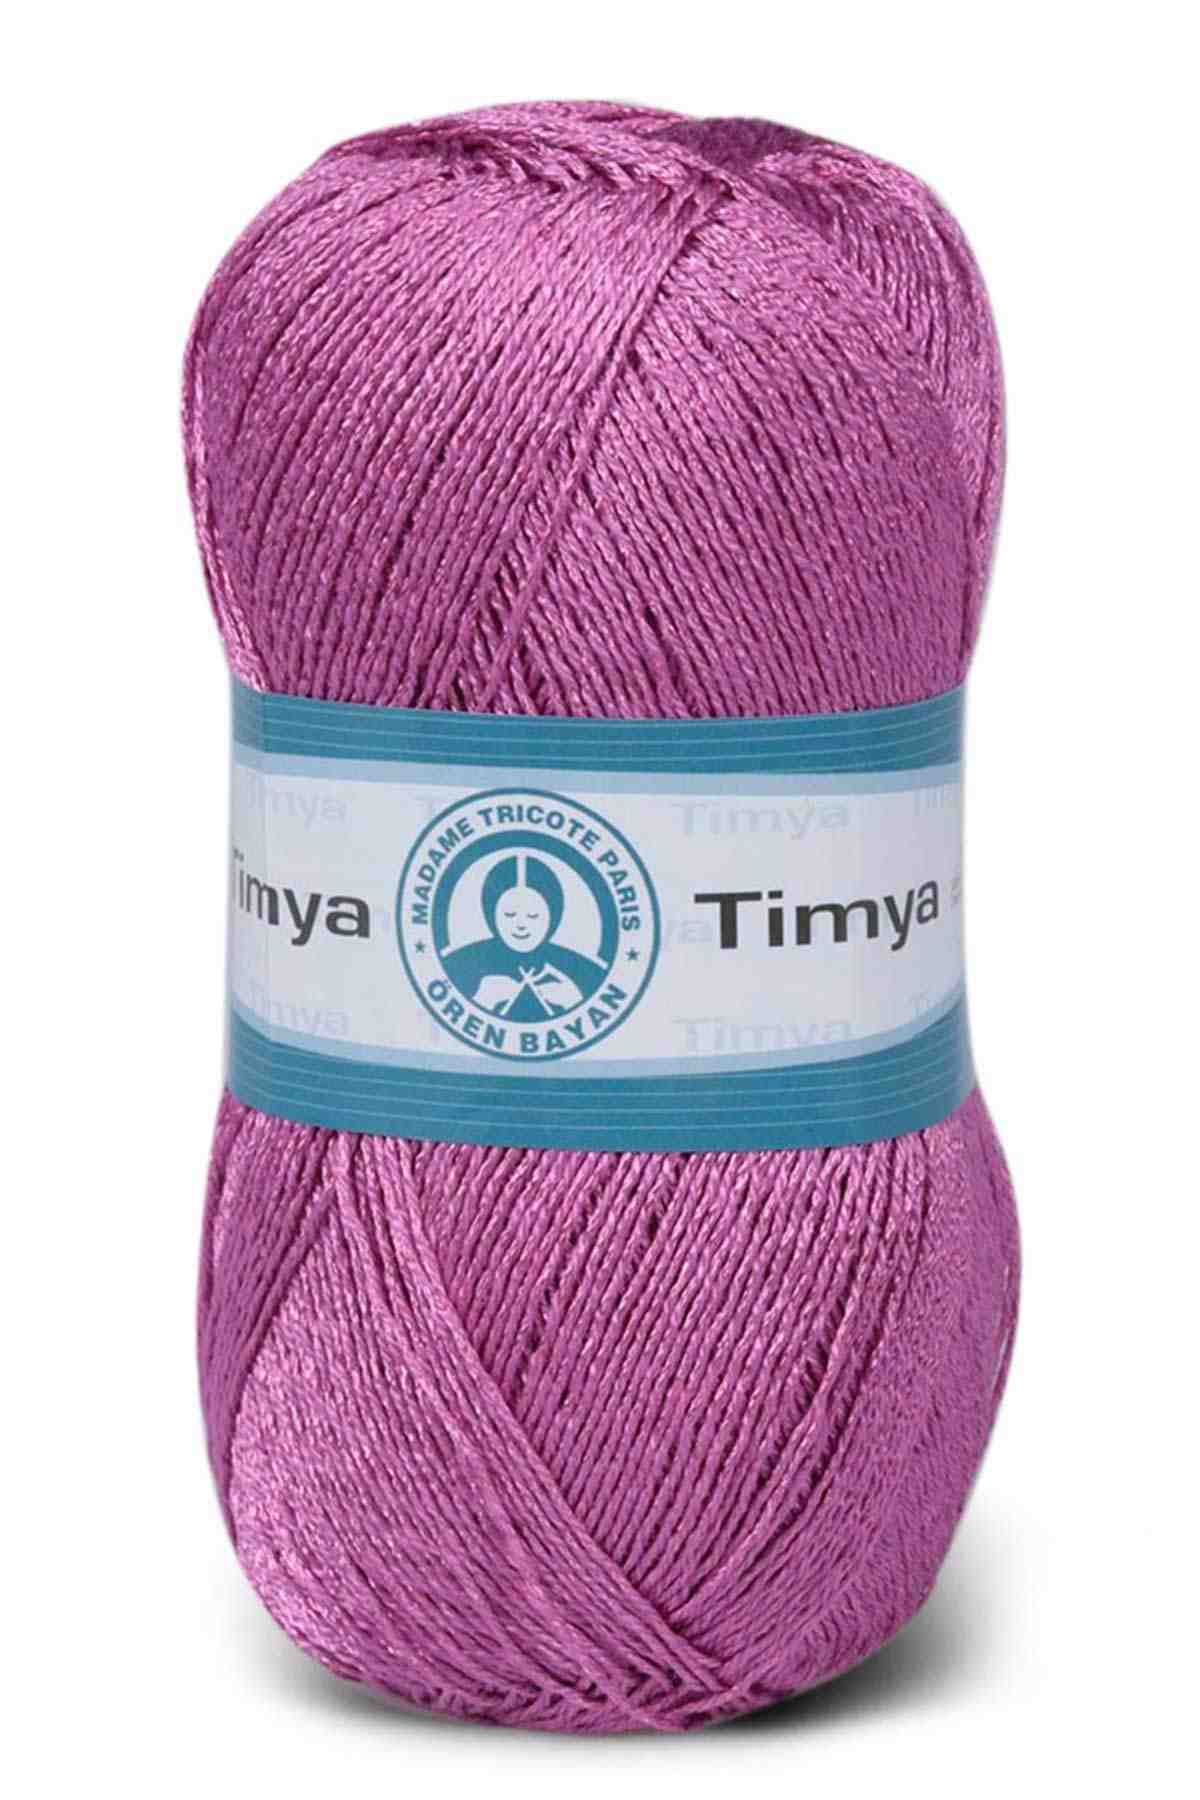 Madame Tricote Paris Timya Cotton Yarn